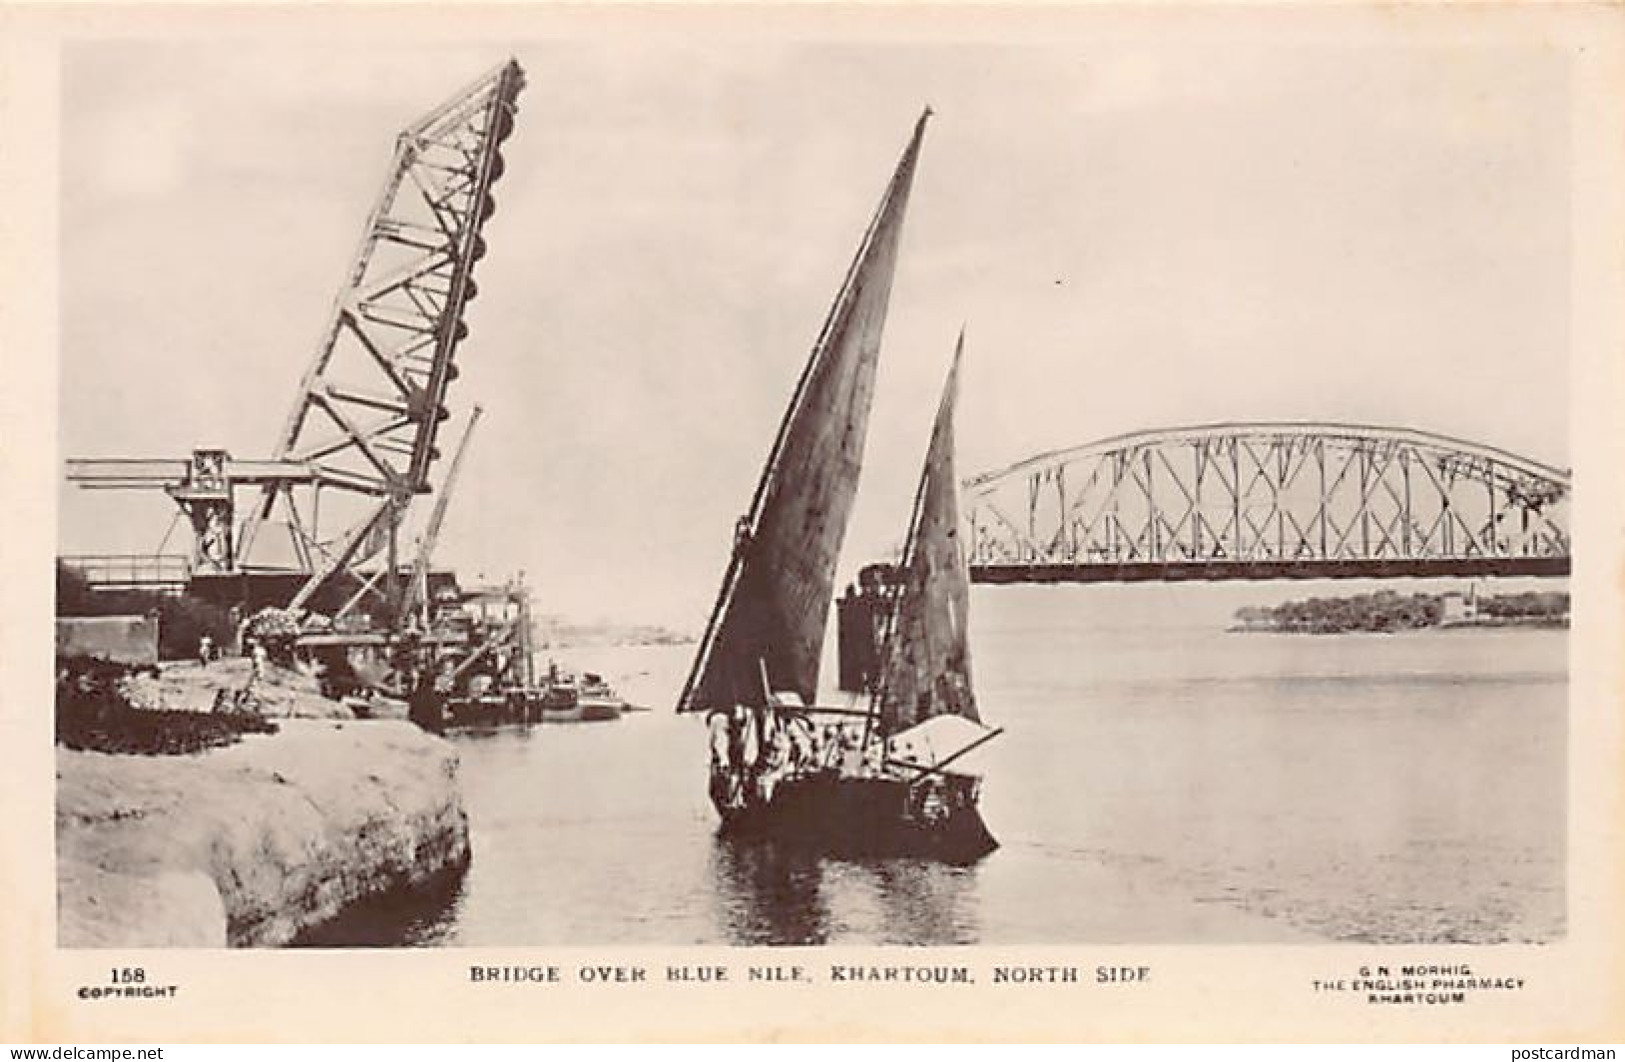 Sudan - KHARTOUM - Bridge Over Blue Nile, North Side - Publ. G. N. Morhig 158 - Soedan